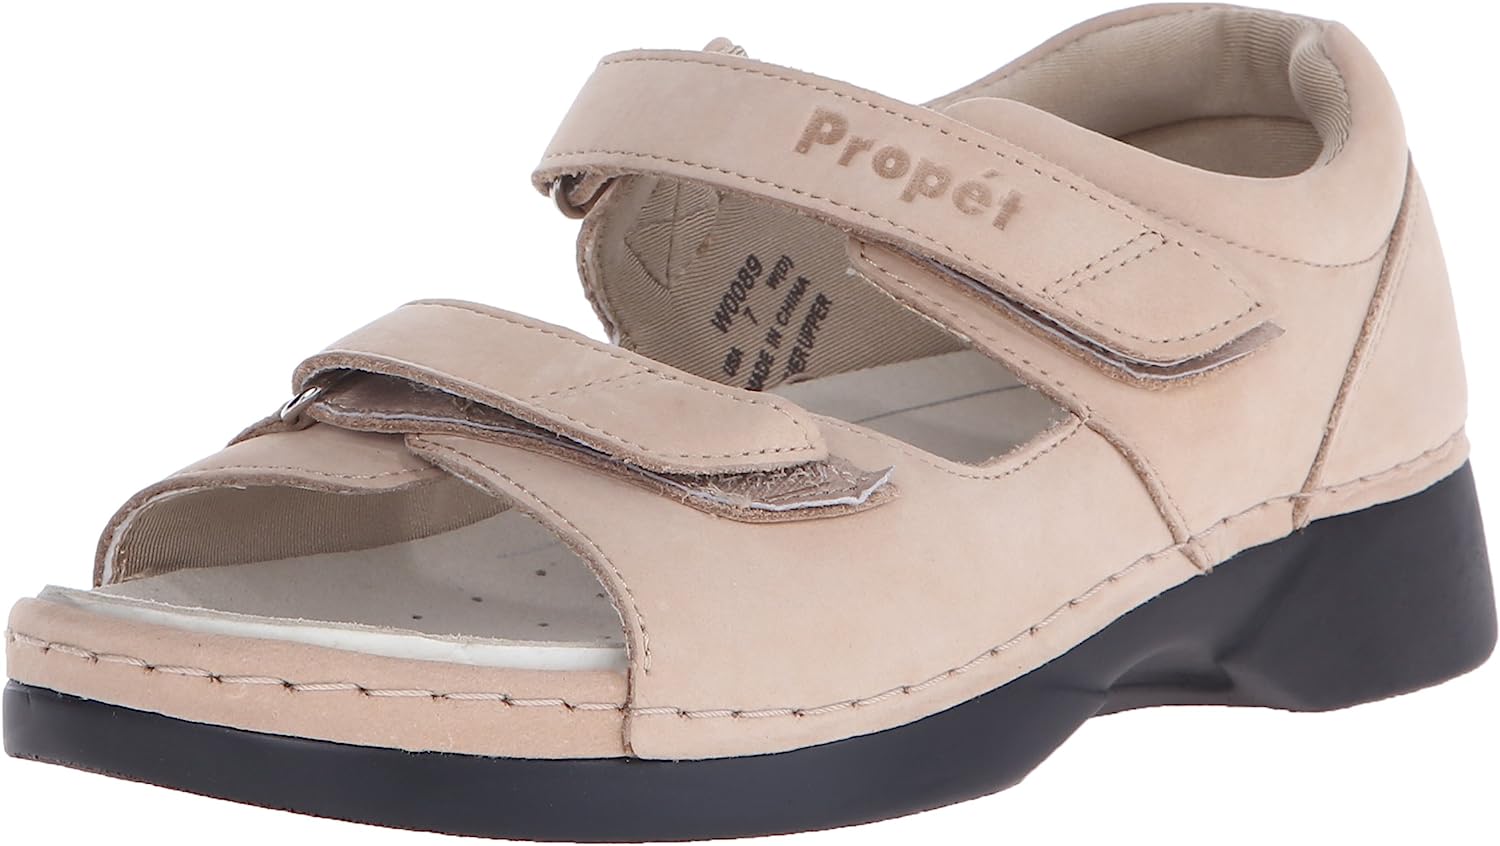 Propét Women's W0089 Pedic Walker Sandal